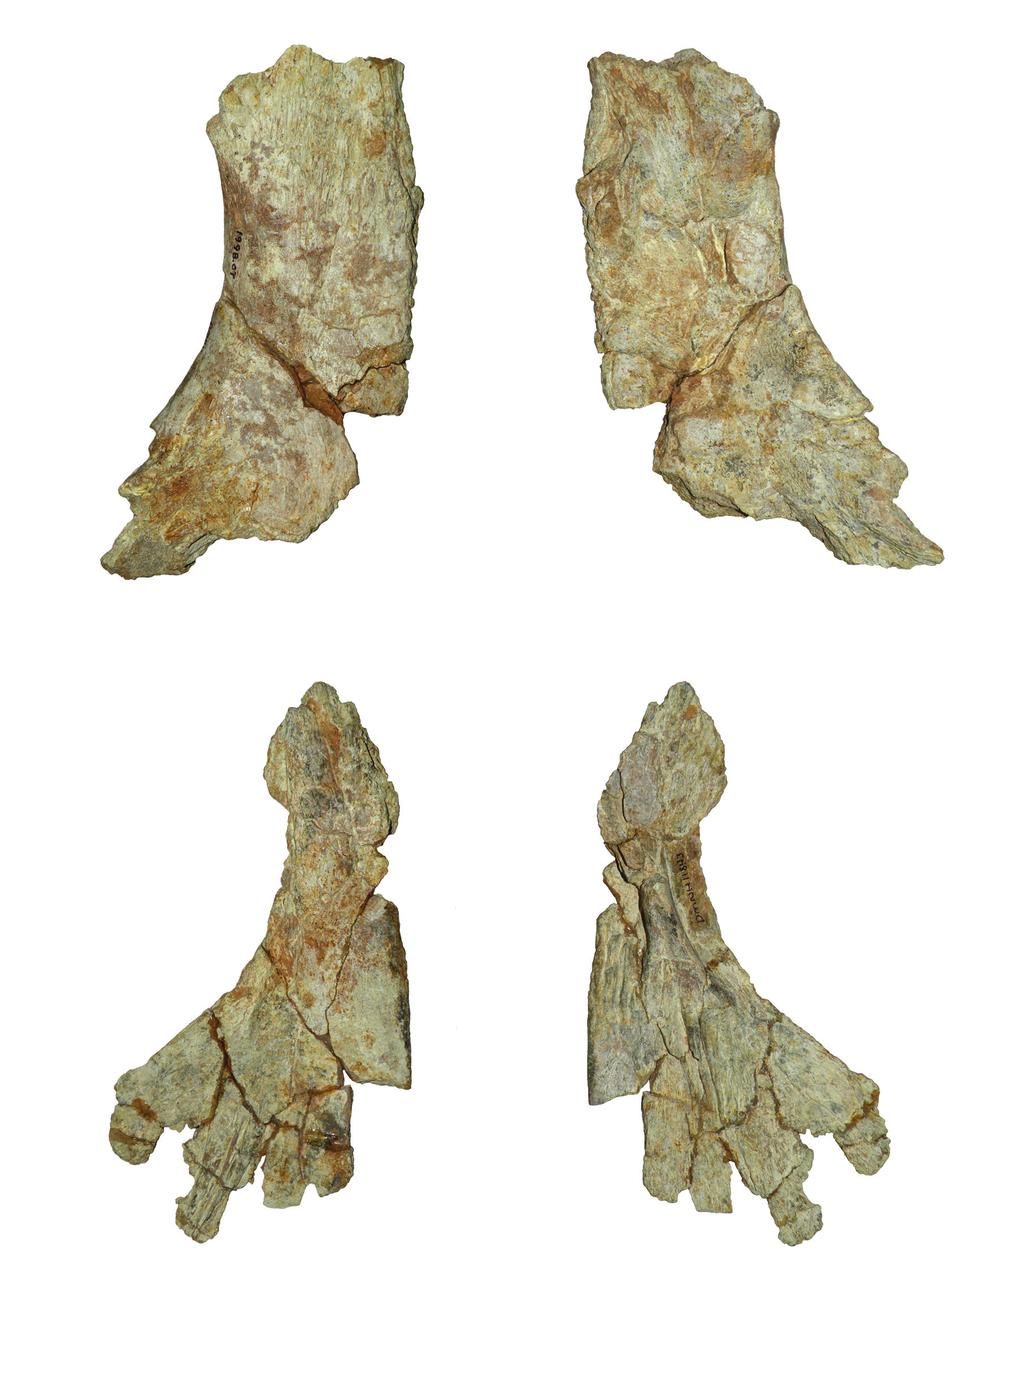 ADAMS & FIORILLO: ICTHYOSAUR FROM TEXAS FIGURE 1. Cranial elements of DMNH 11843. 1.1 parietal, dorsal view, 1.